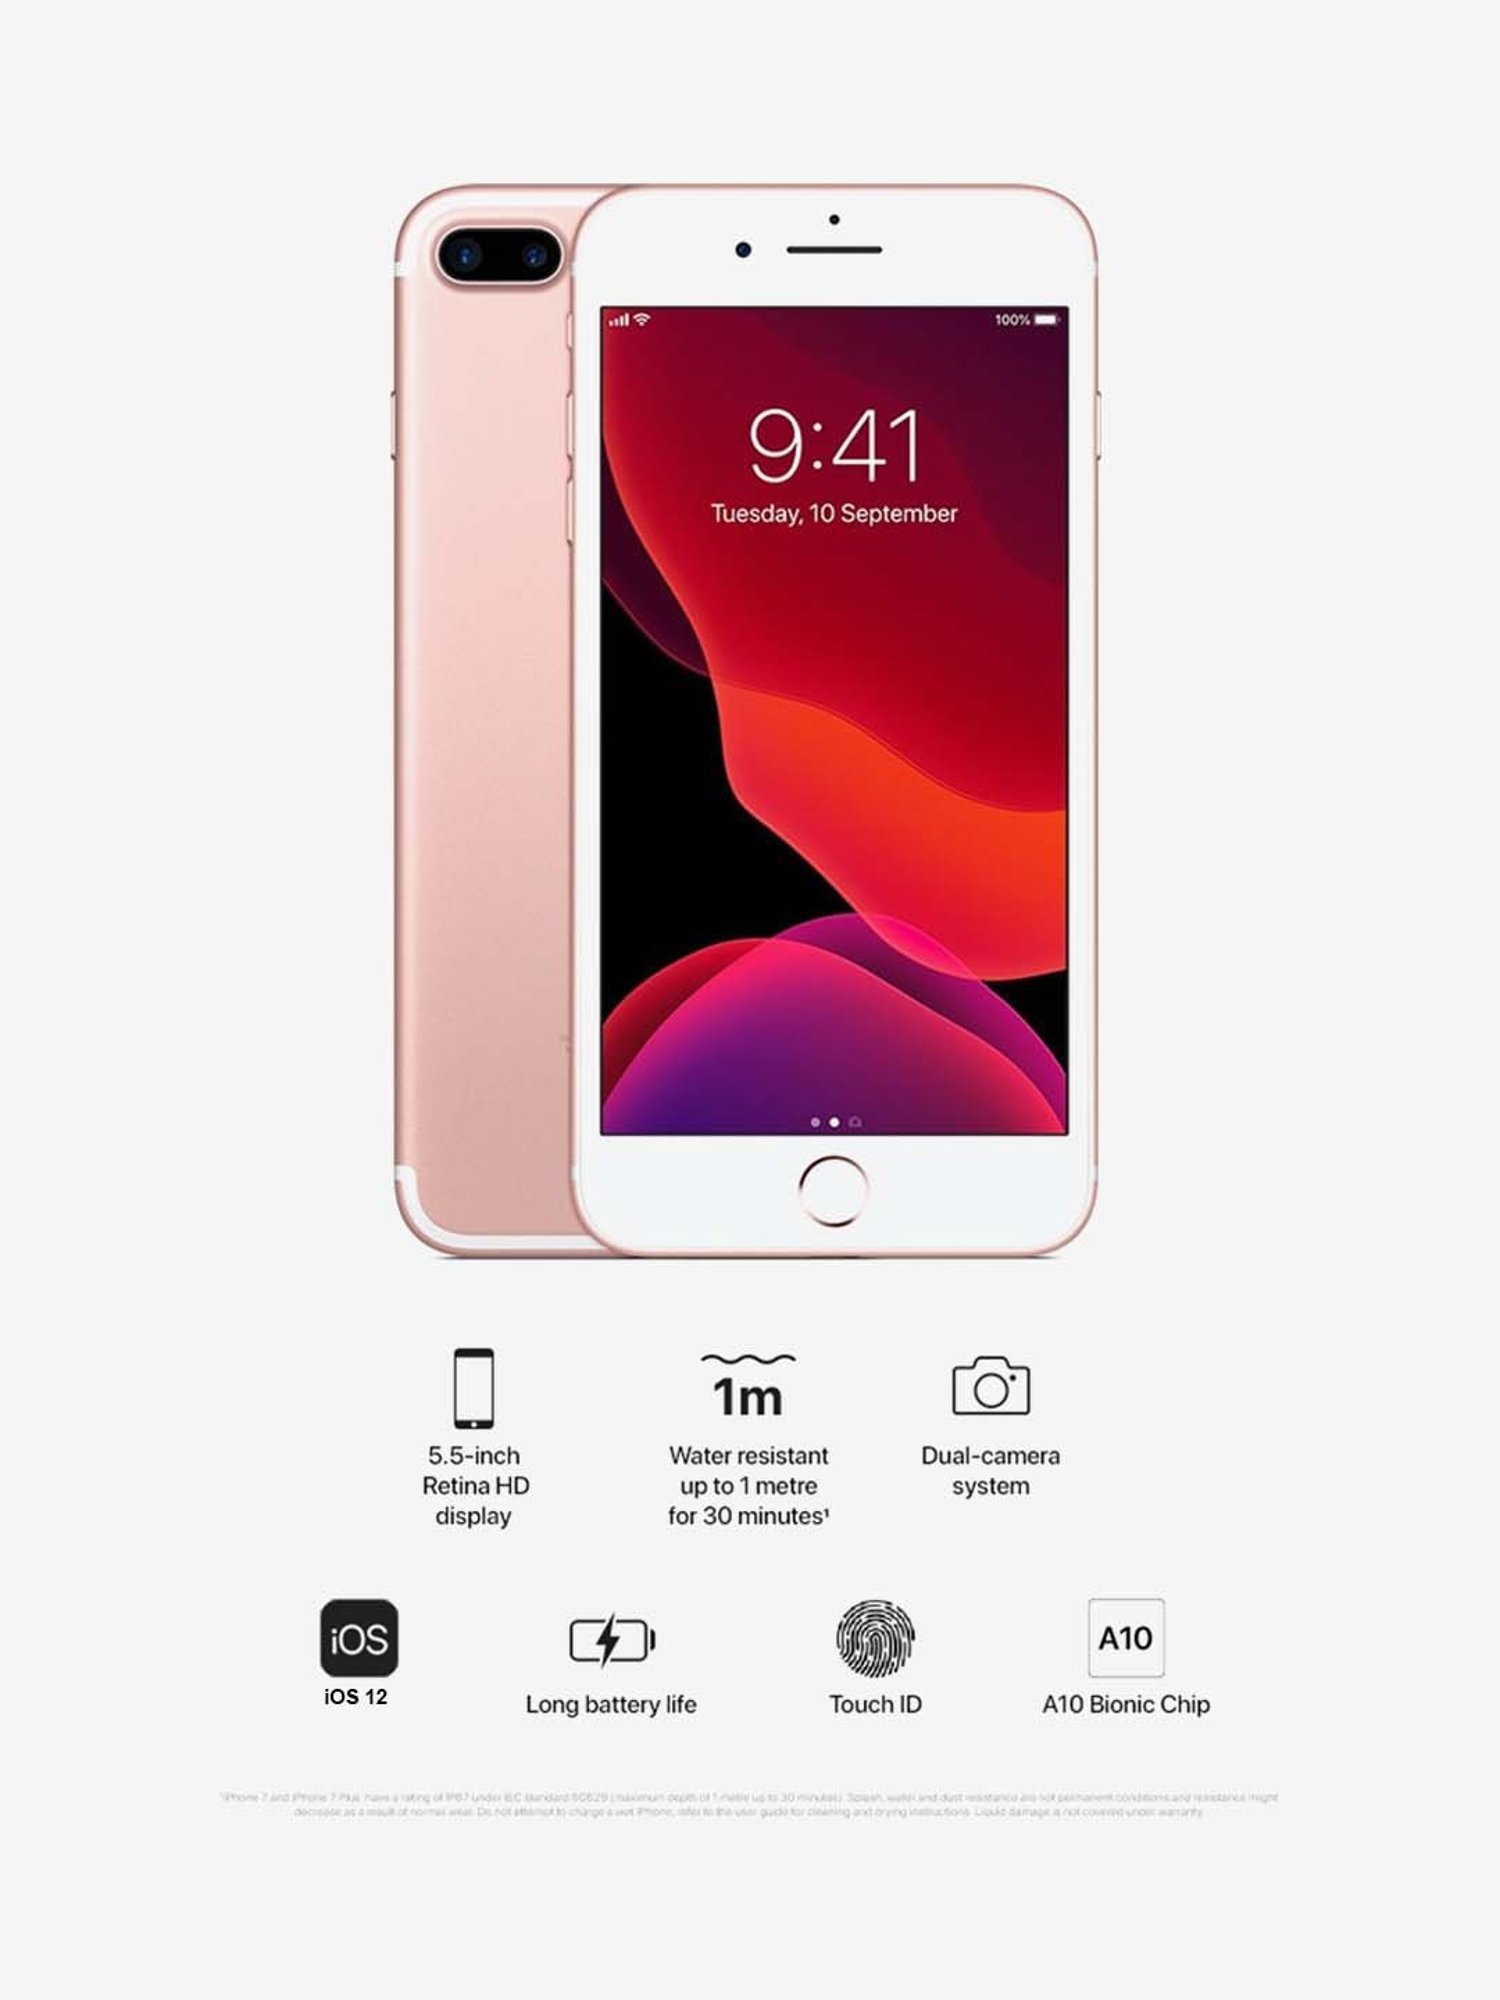 Buy Iphone 7 Plus 128gb Rose Gold Online At Best Price In India At Tata Cliq